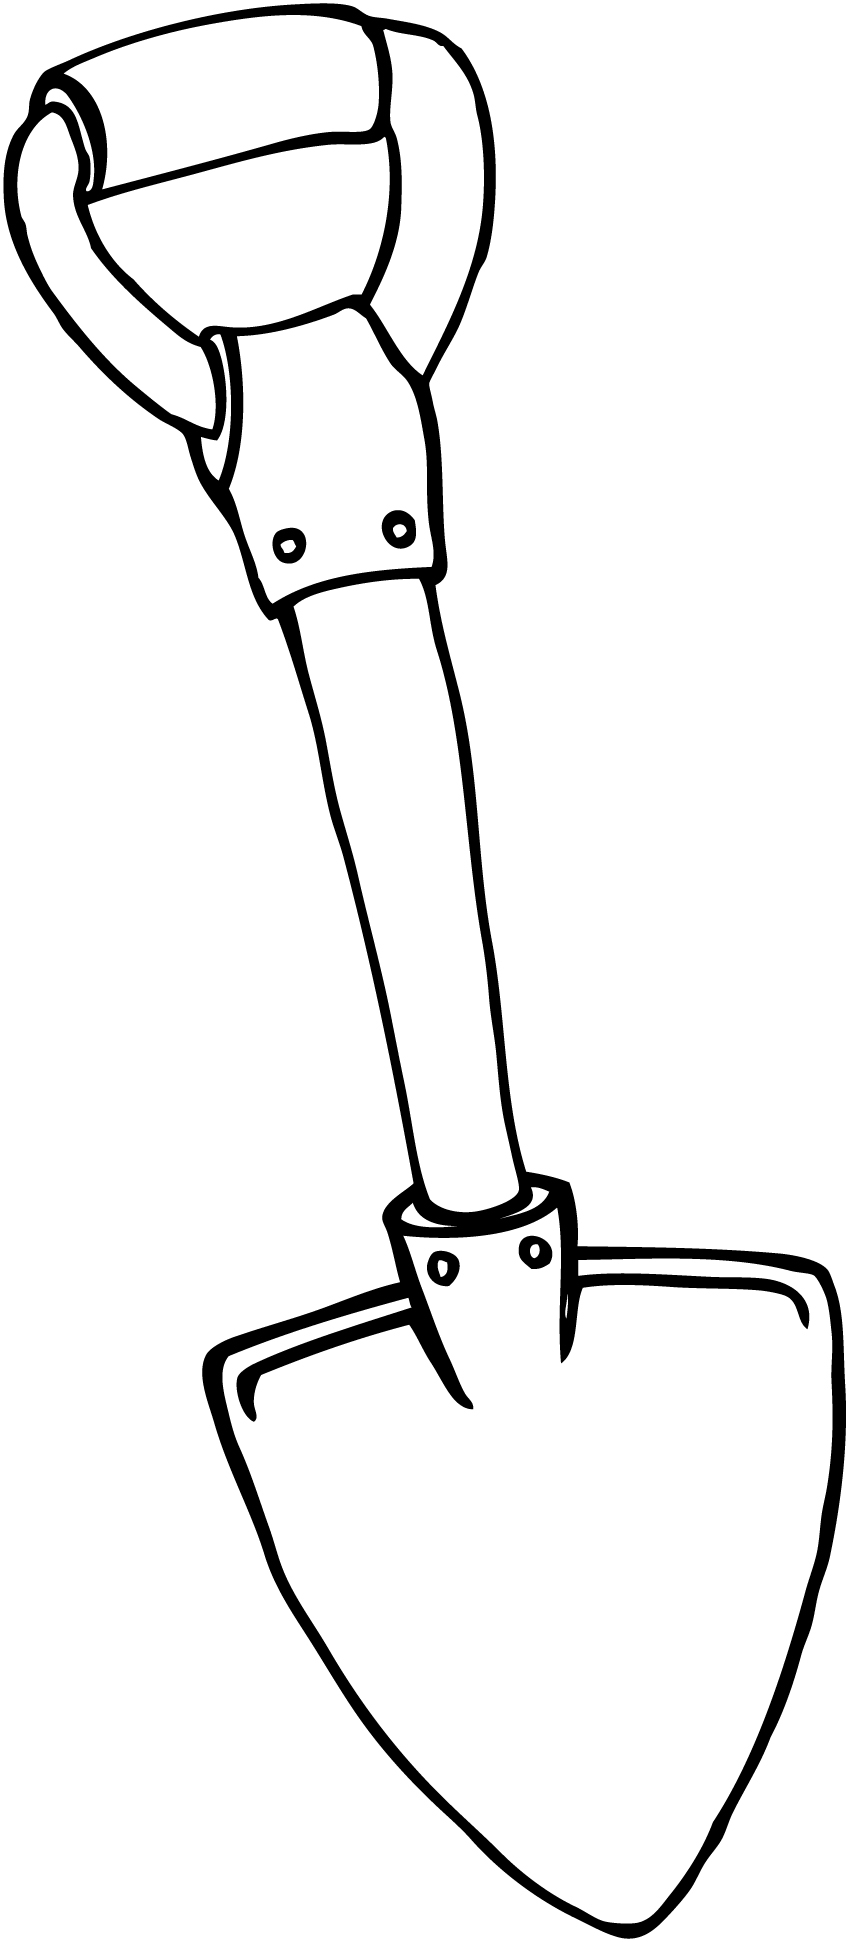 black and white shovel clipart - Clip Art Library